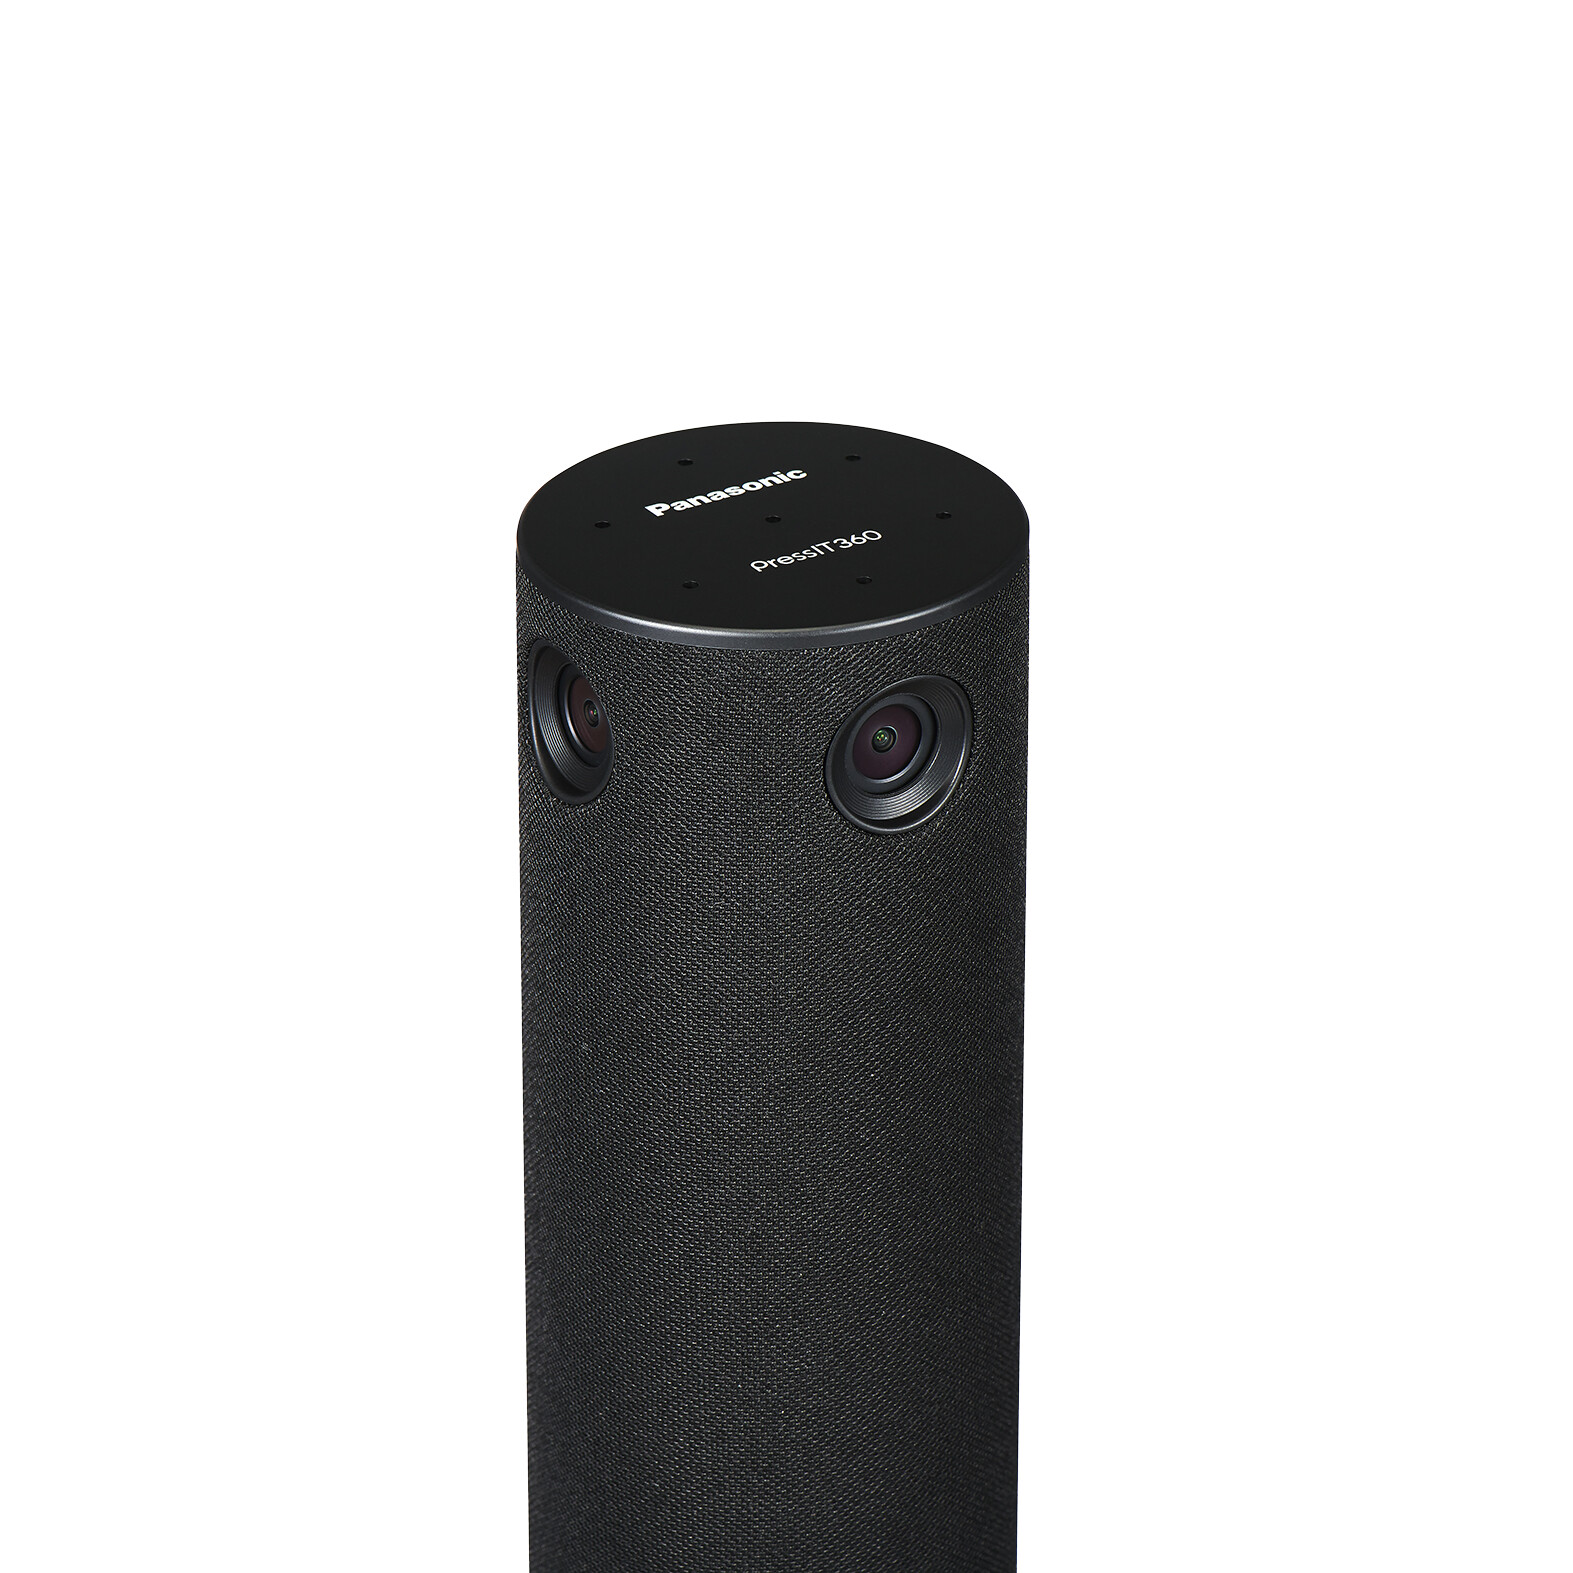 Panasonic-TY-CSP1-360-conferentiecamera-met-Speakerphone